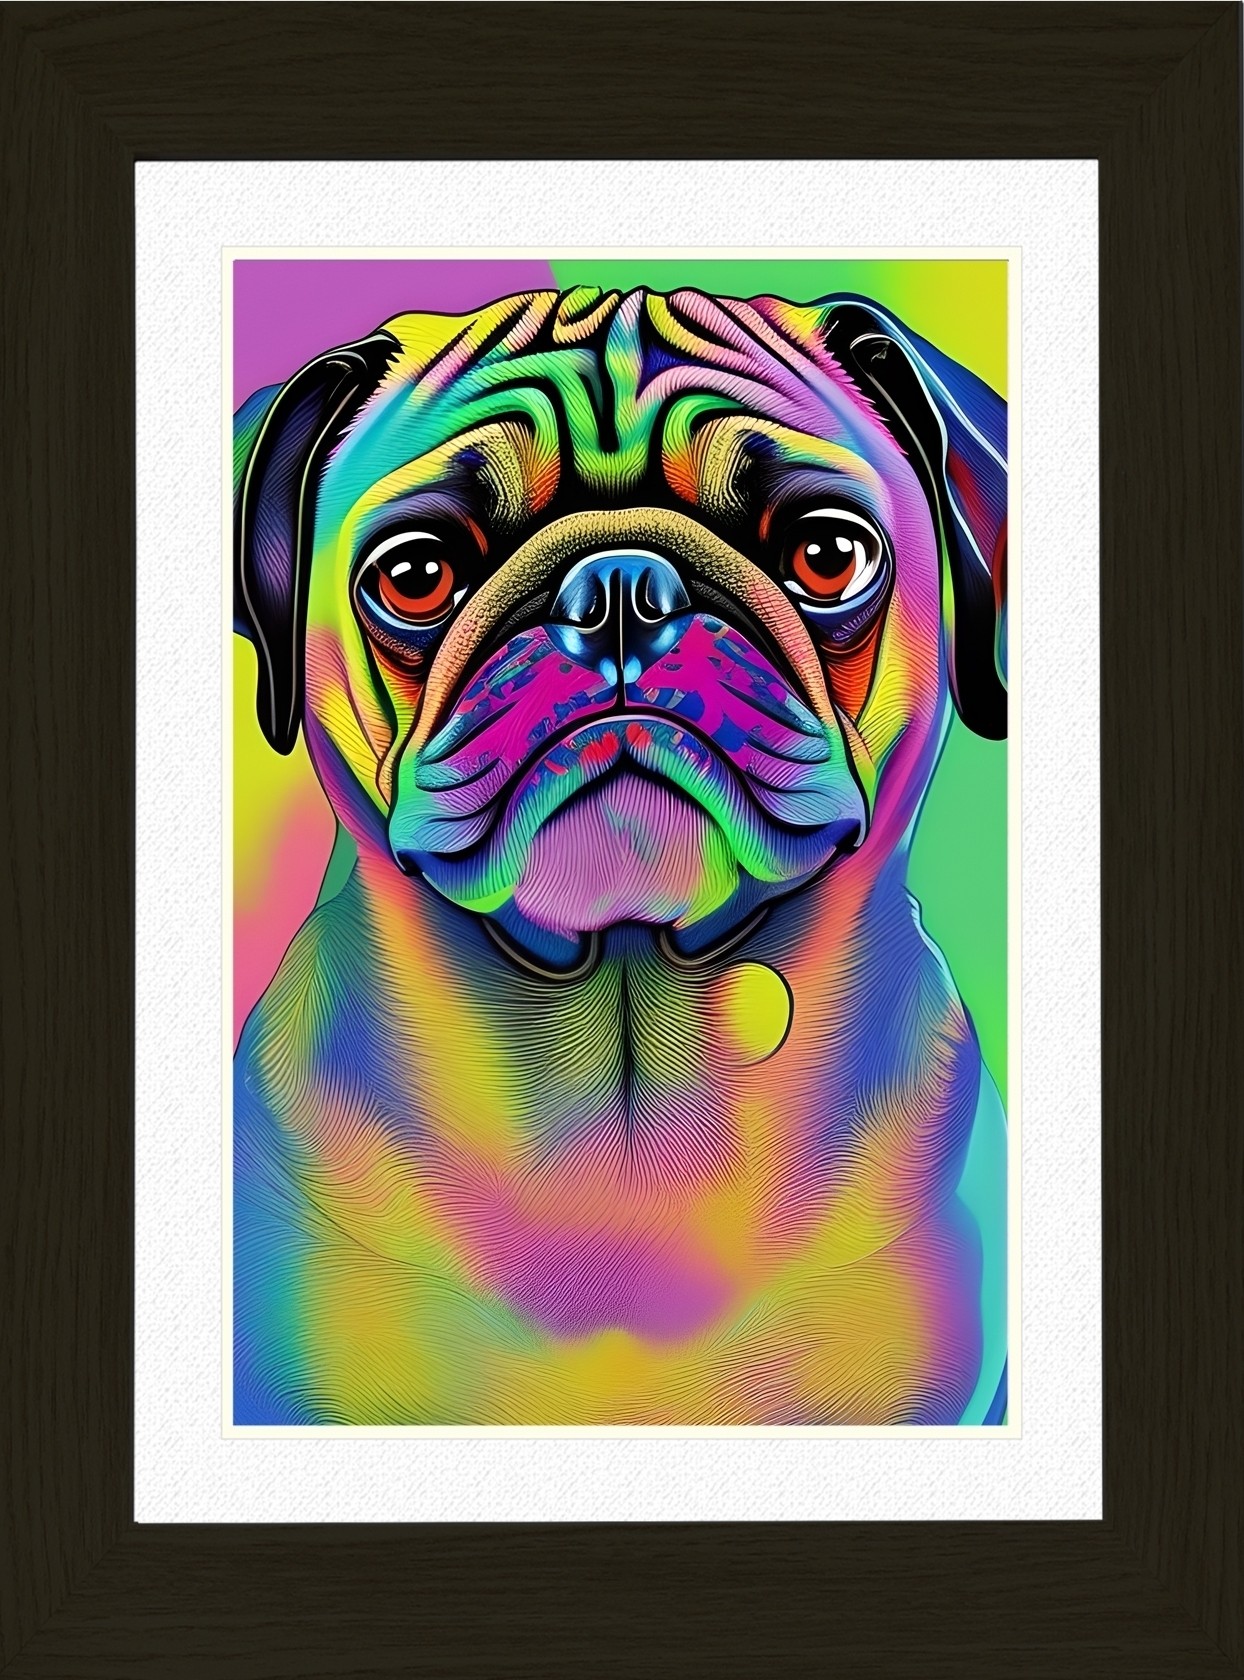 Pug Dog Picture Framed Colourful Abstract Art (30cm x 25cm Black Frame)